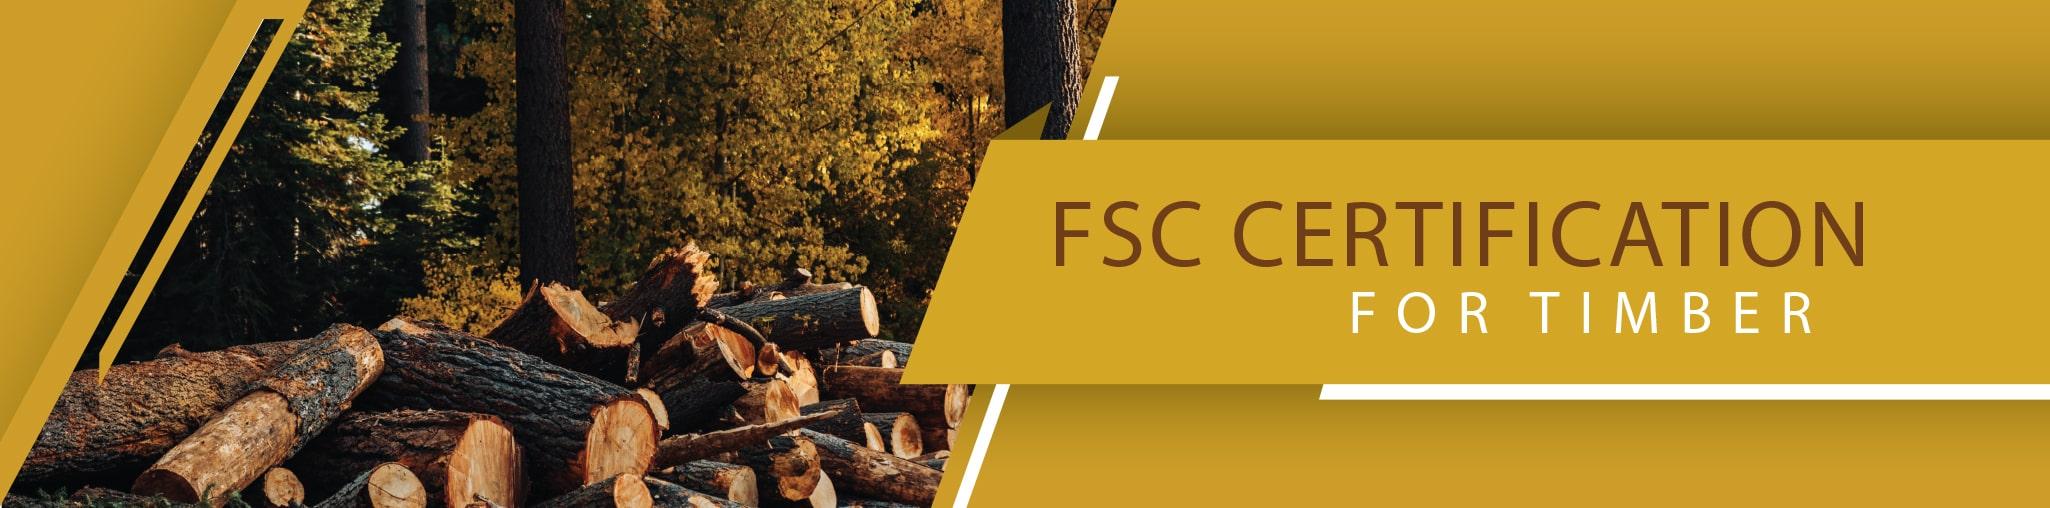 FSC Certification for Timber